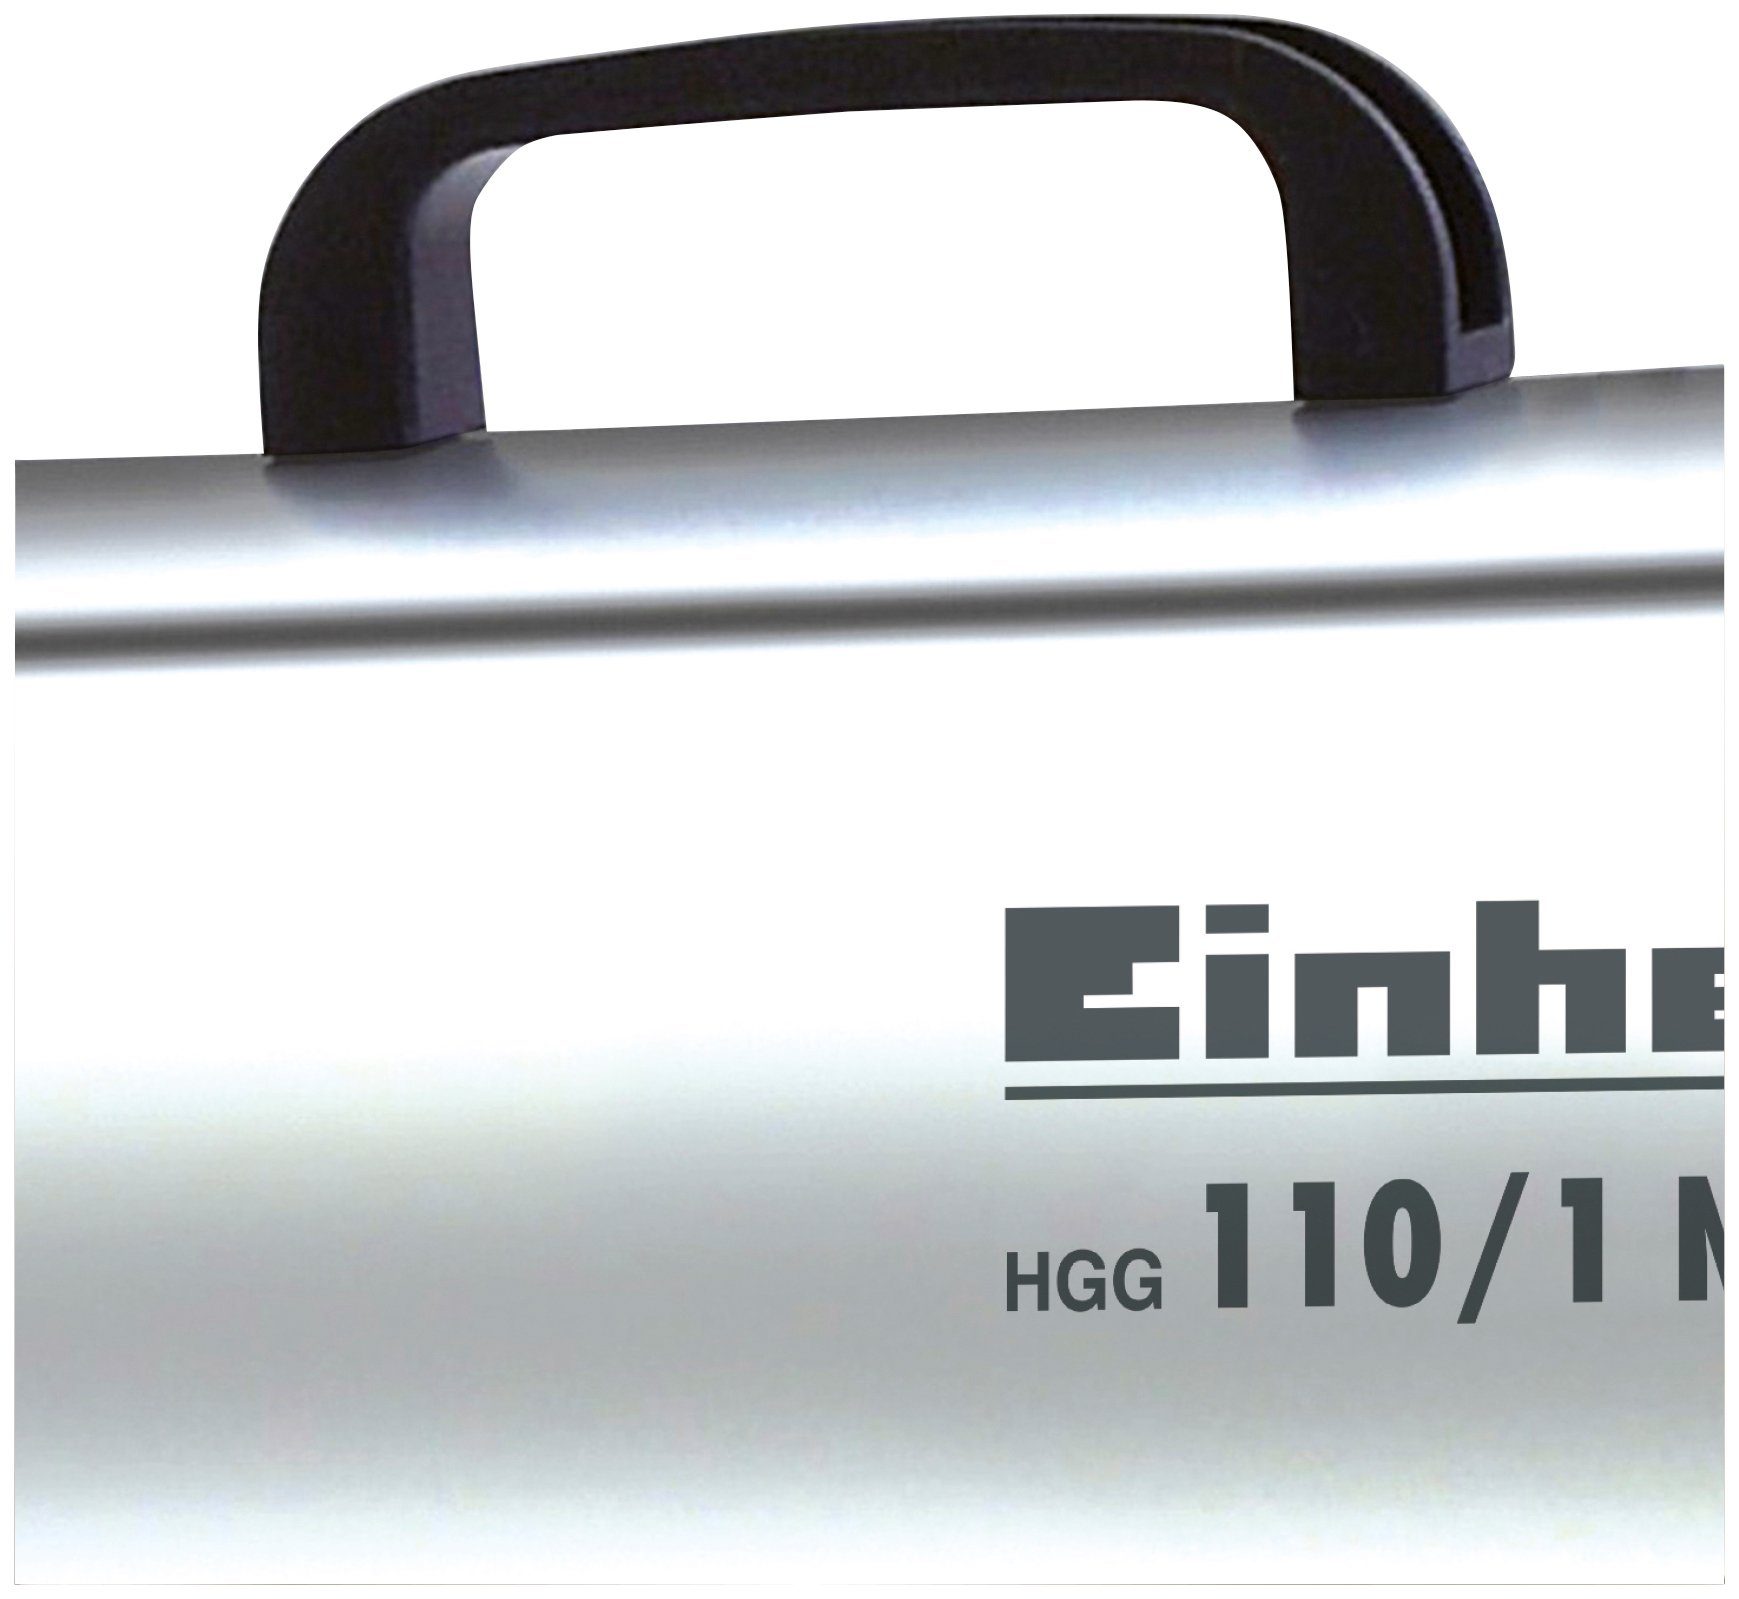 10 Einhell Niro, 110/1 Heizgerät W HGG